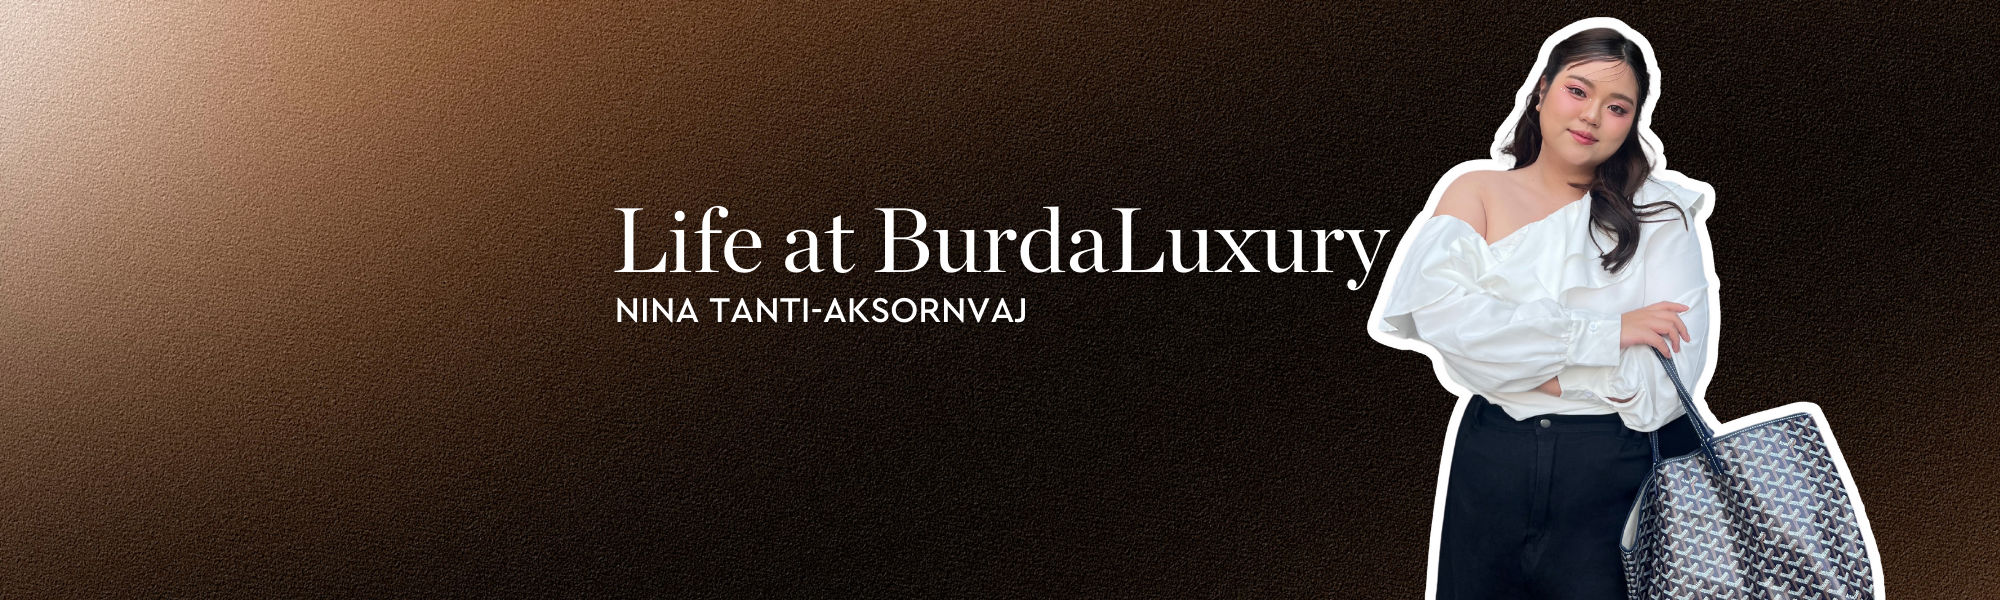 Life at BurdaLuxury – Nina Tanti-Aksornvaj